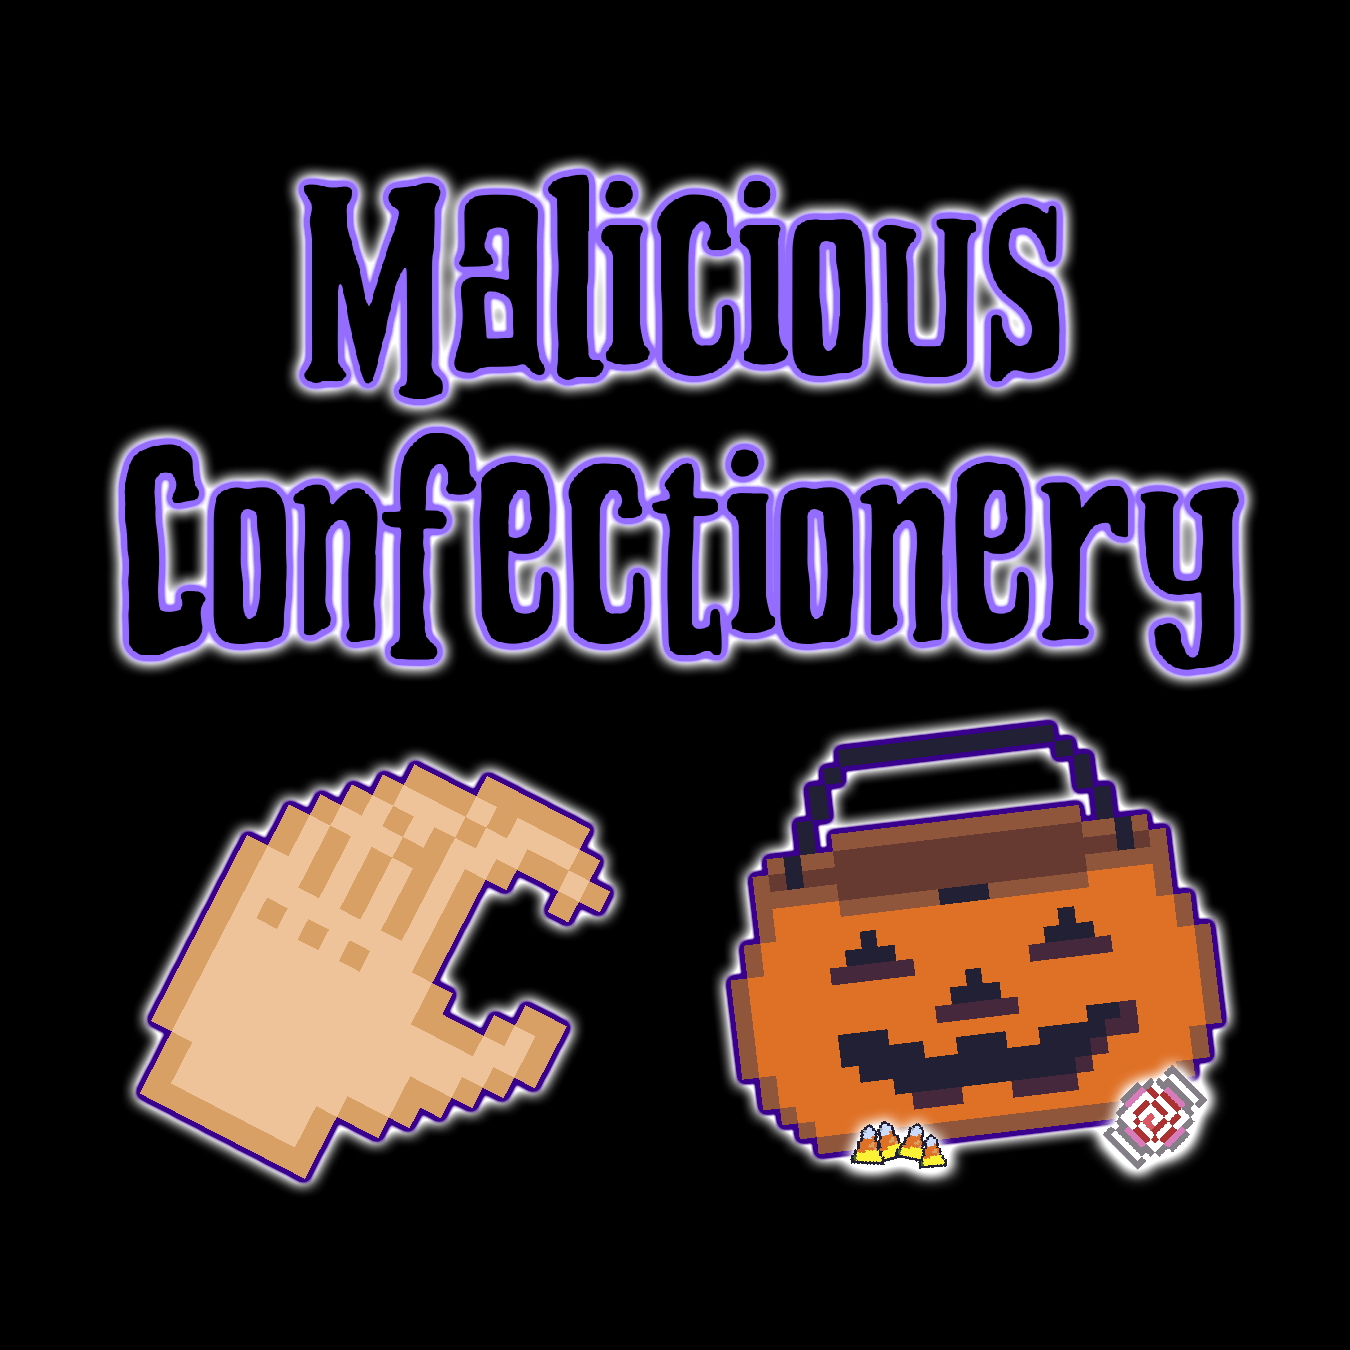 Malicious Confectionery